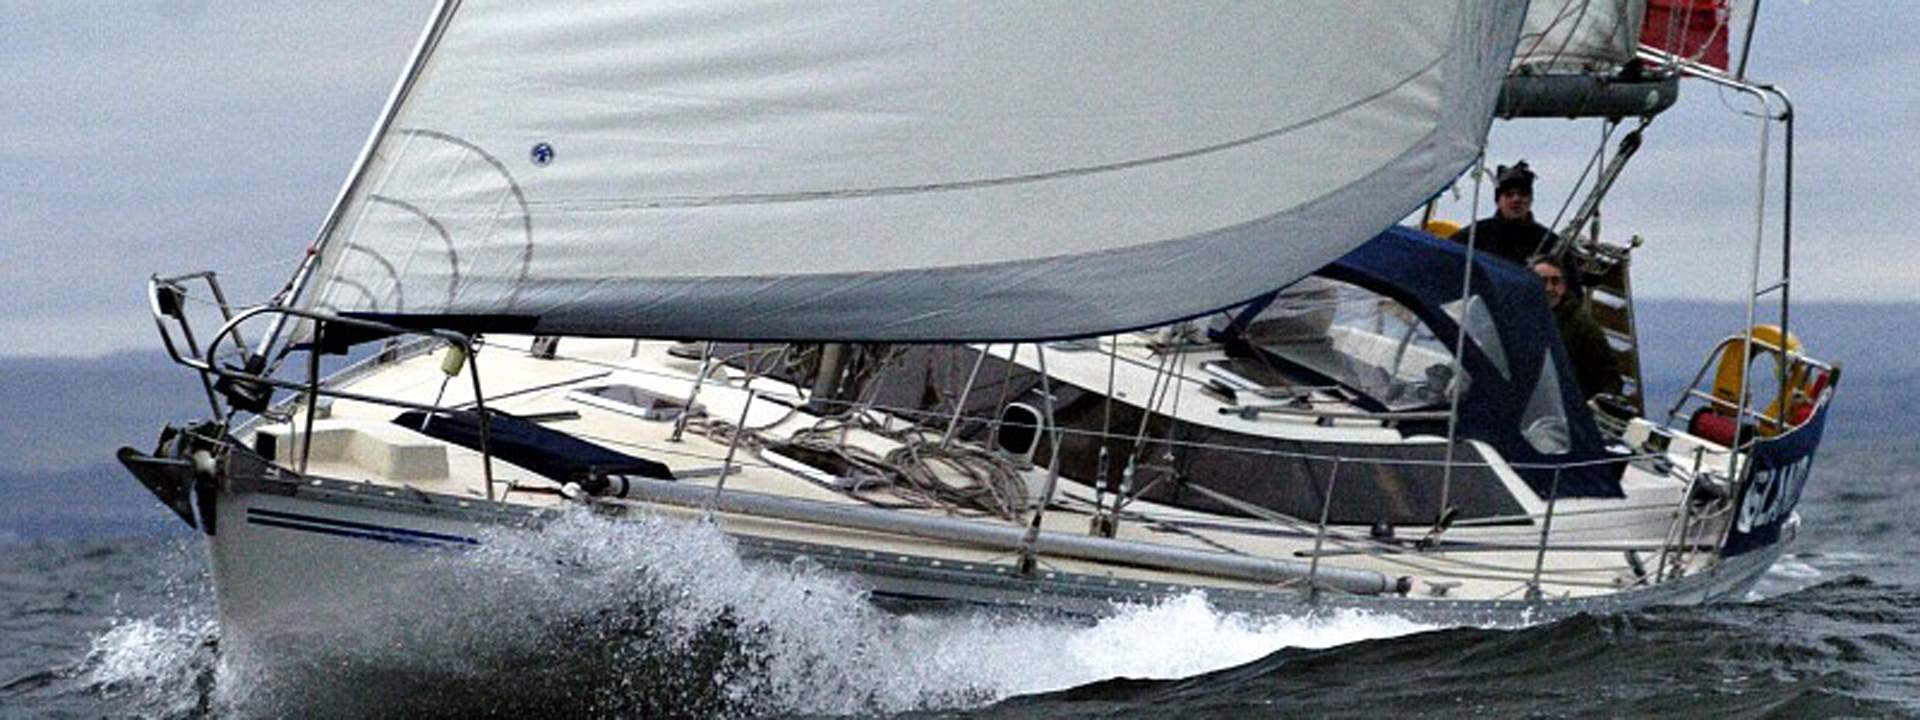 Sailboat Trinidad